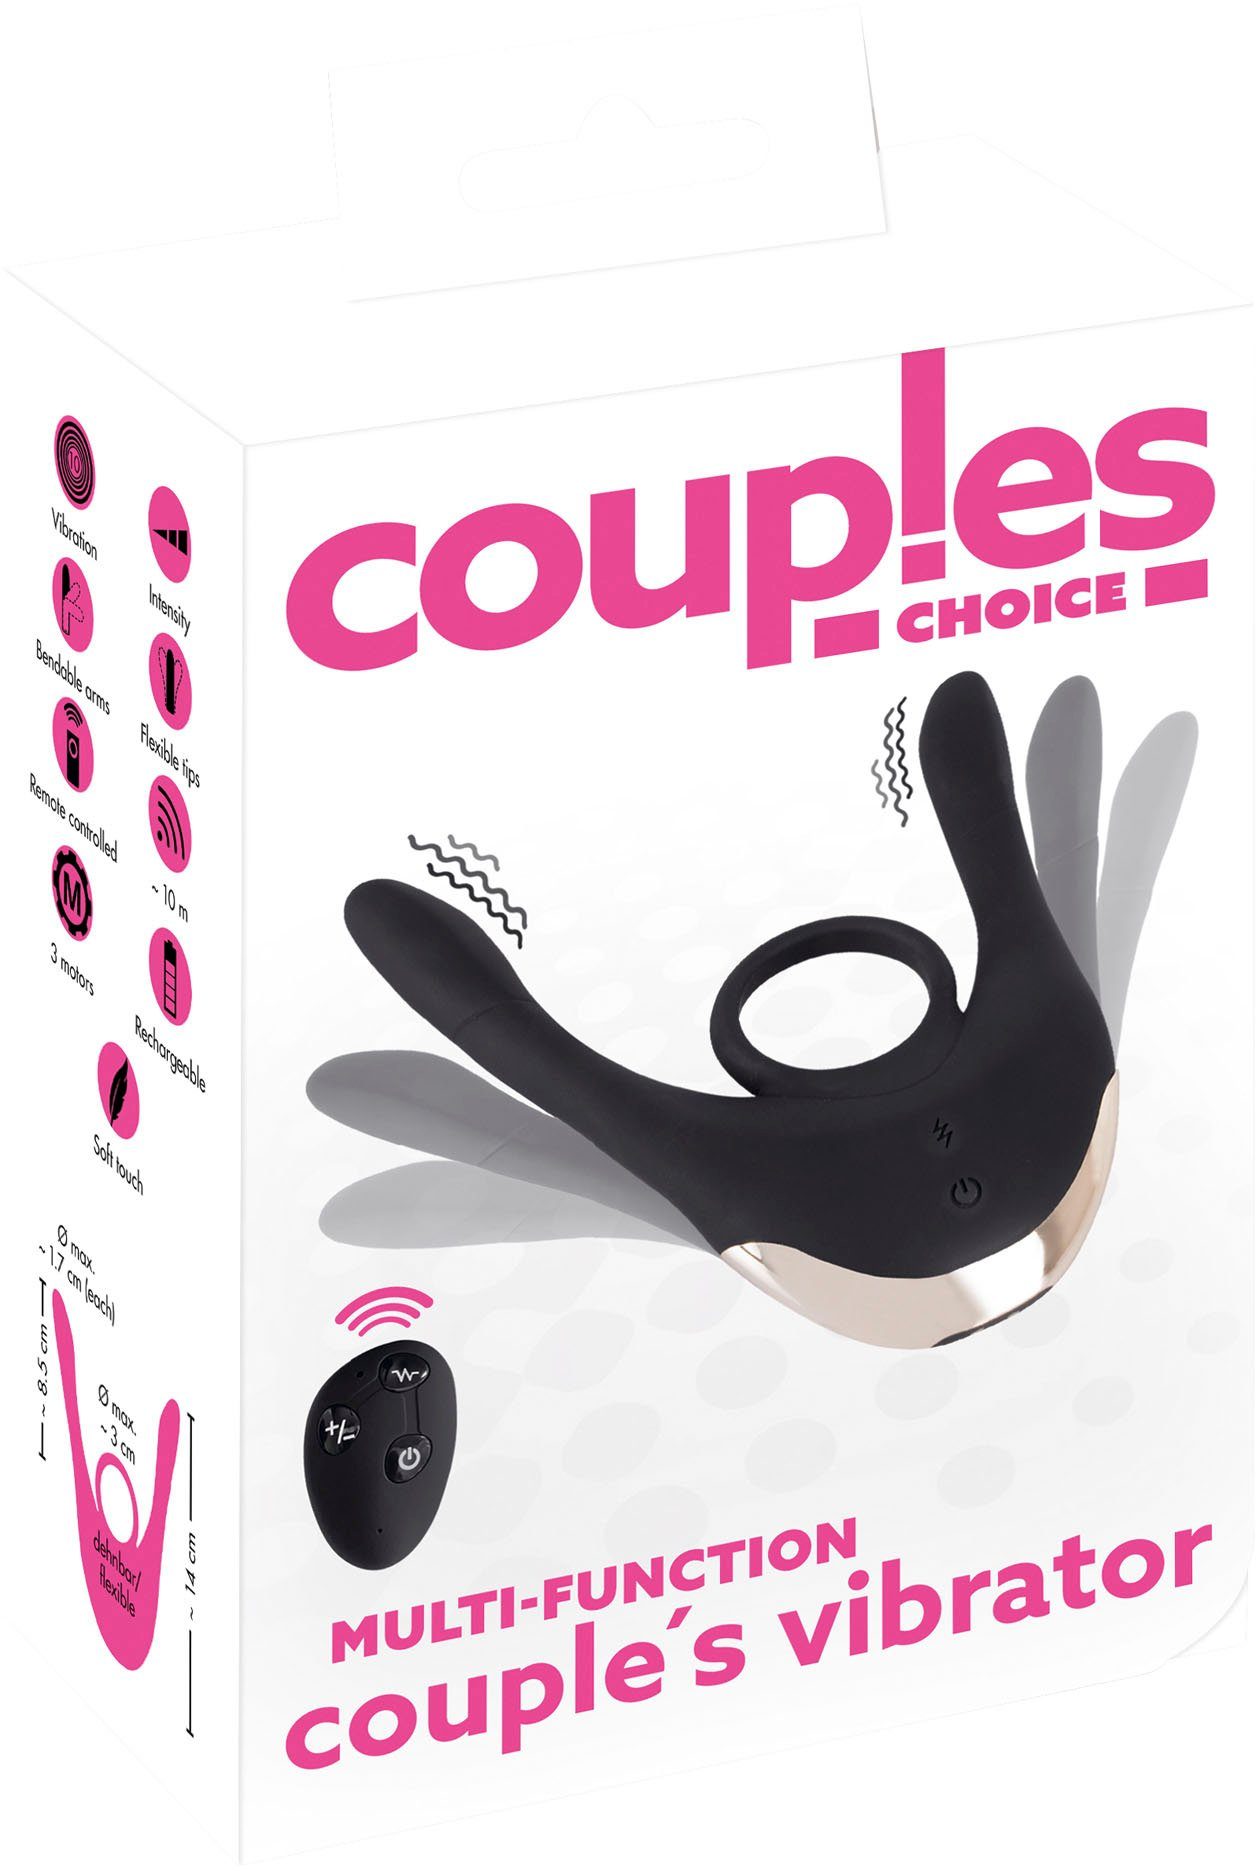 Couples coup!es choice Paar-Vibrator Choice